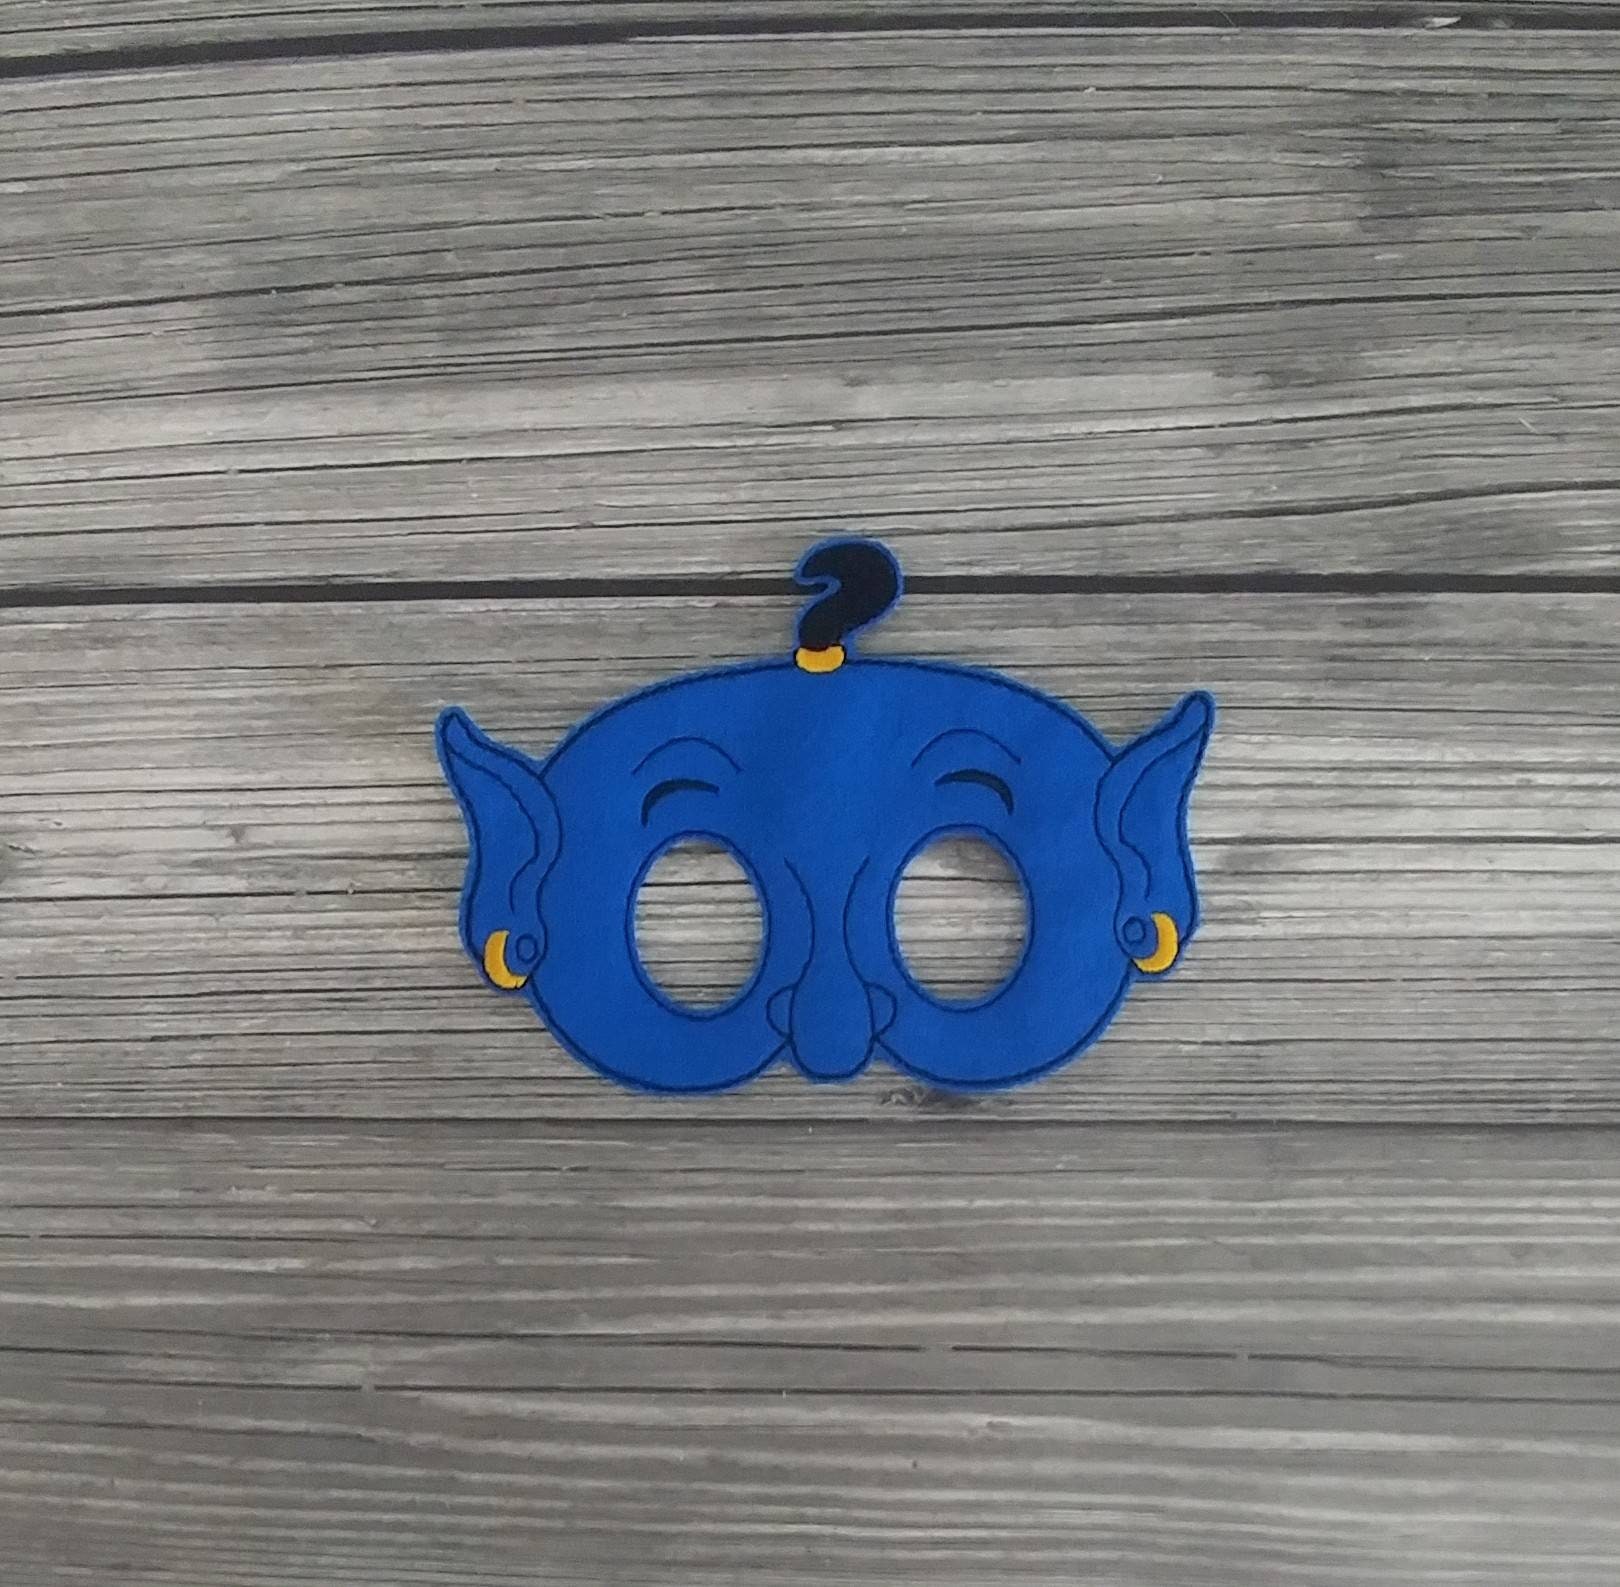 Rust pålægge Spædbarn Genie Inspired Mask Kid & Adult Creative Play Halloween - Etsy